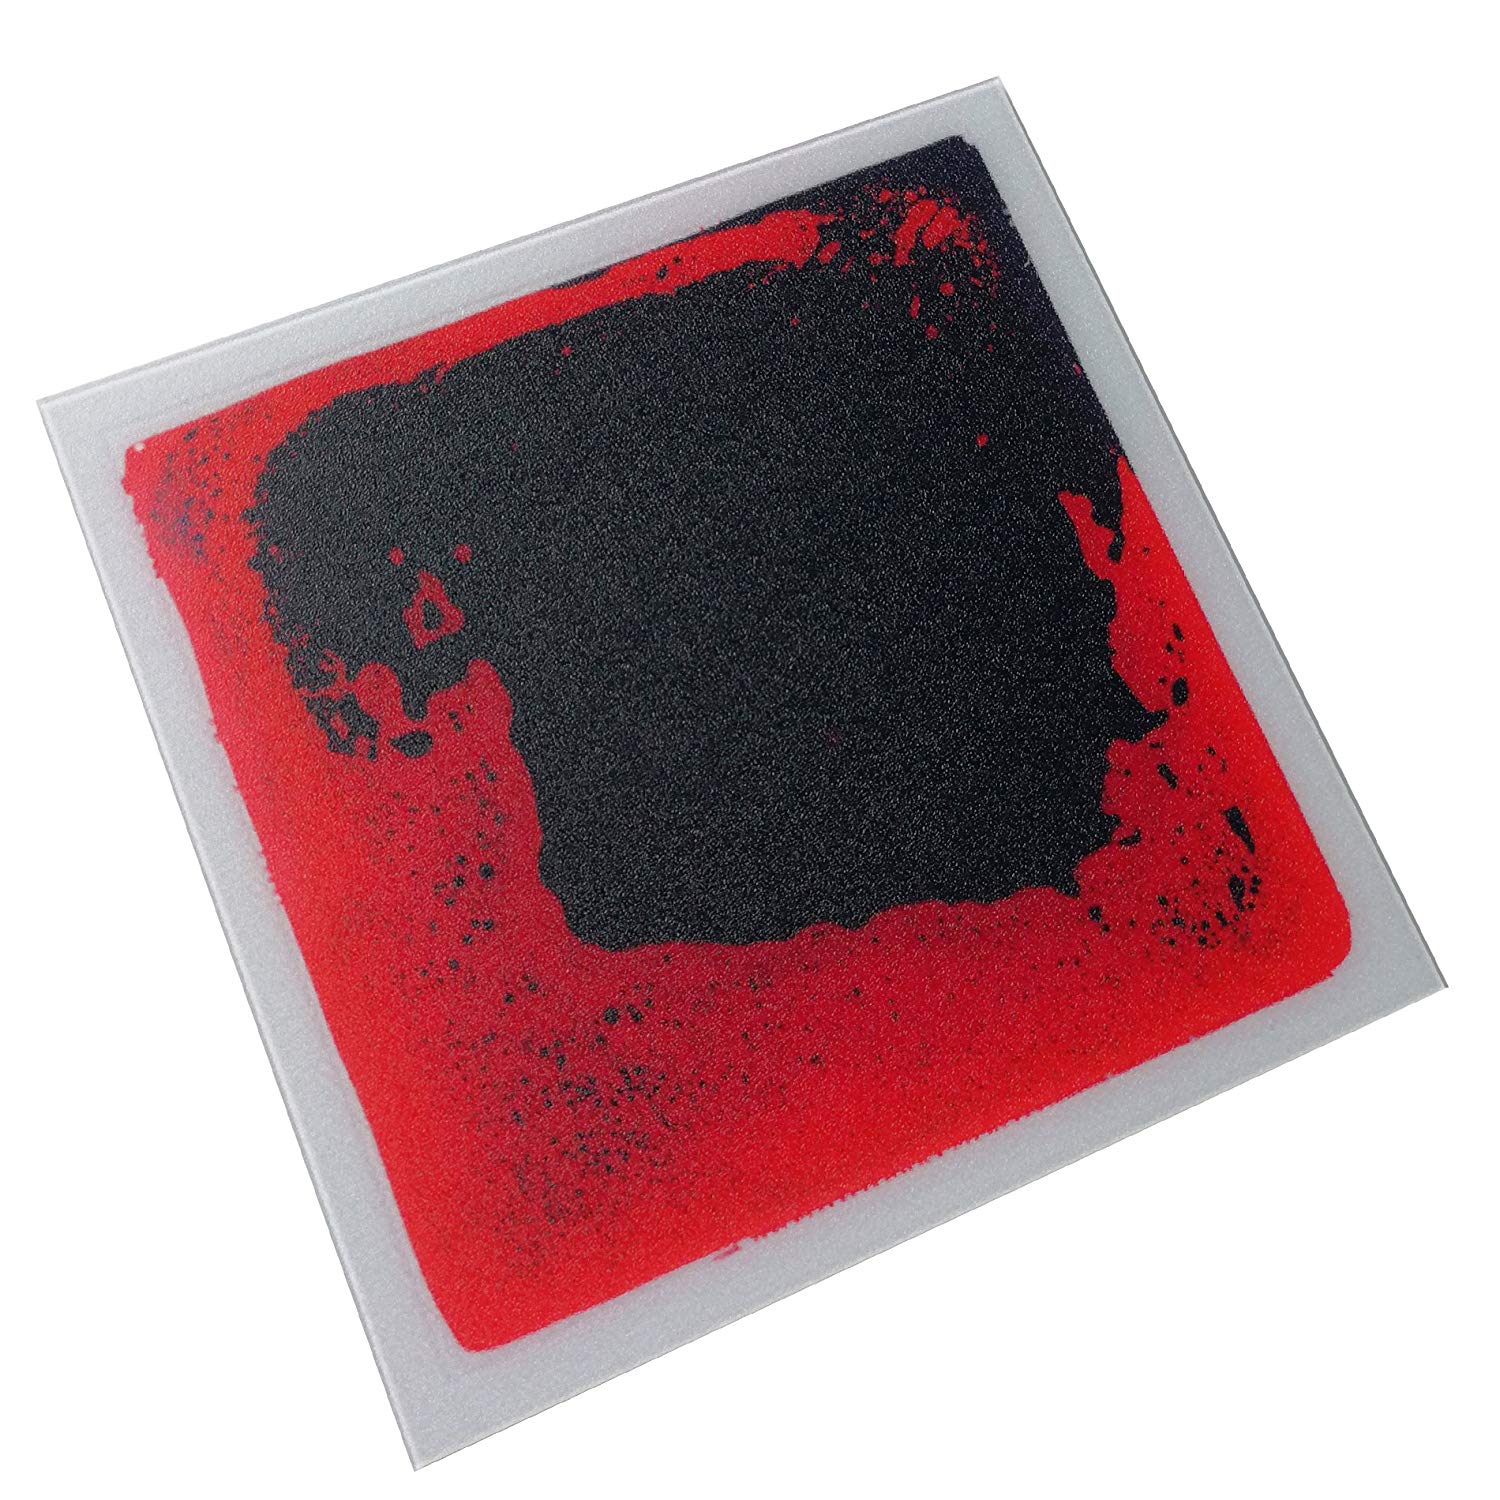 Art3d Liquid Dance Floor Colorful Home Decor Tile, 12" x 12" Black-Red